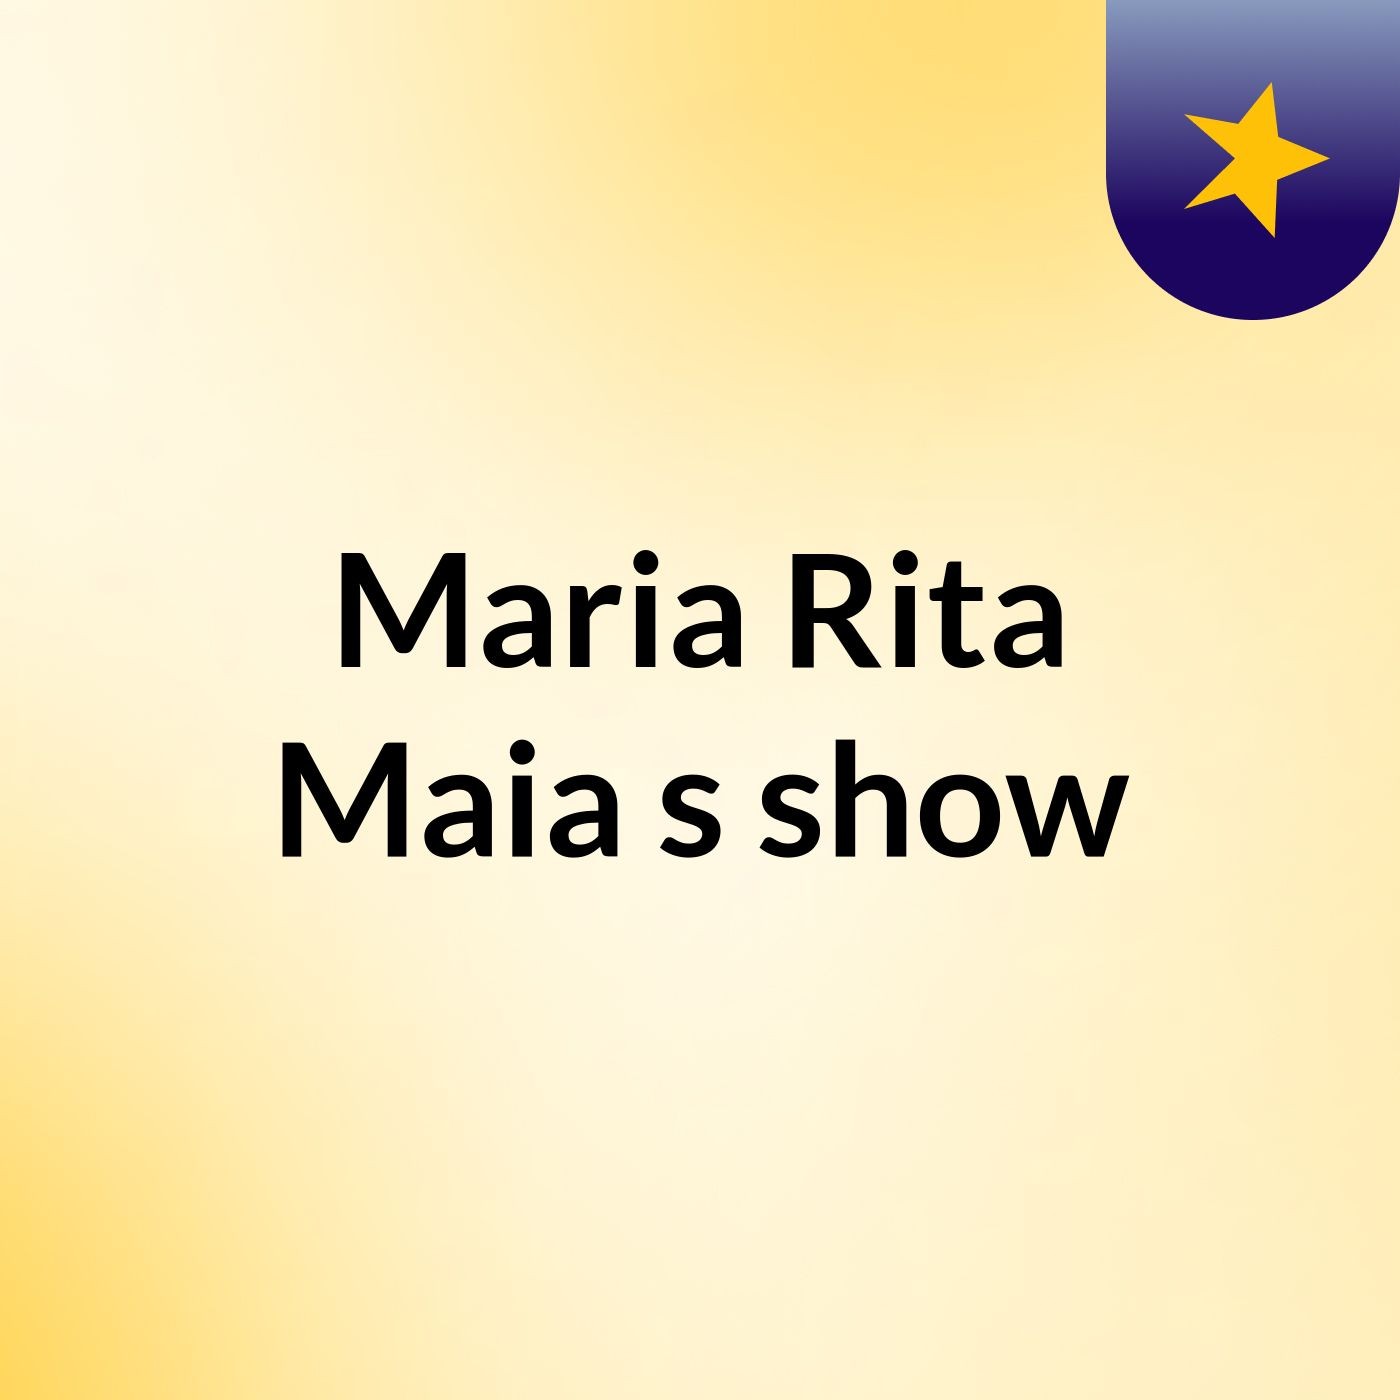 Maria Rita Maia's show